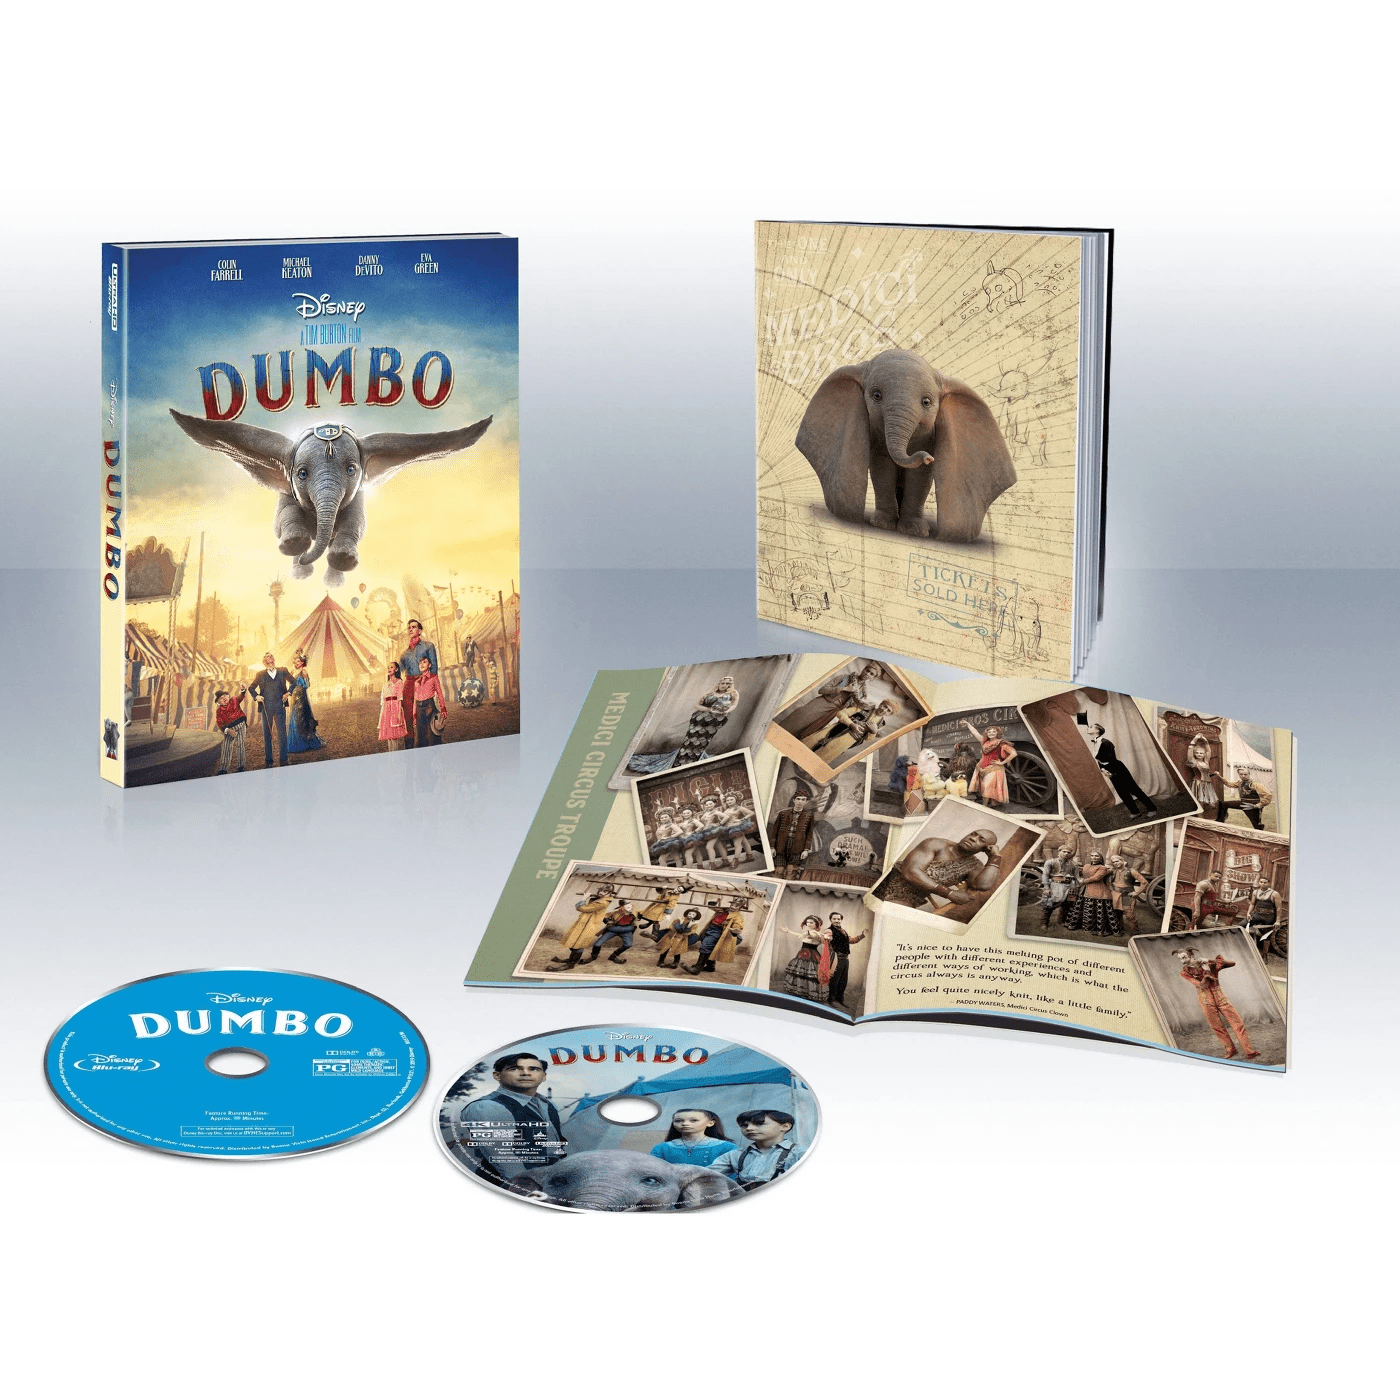 Dumbo (Blu-ray + DVD)